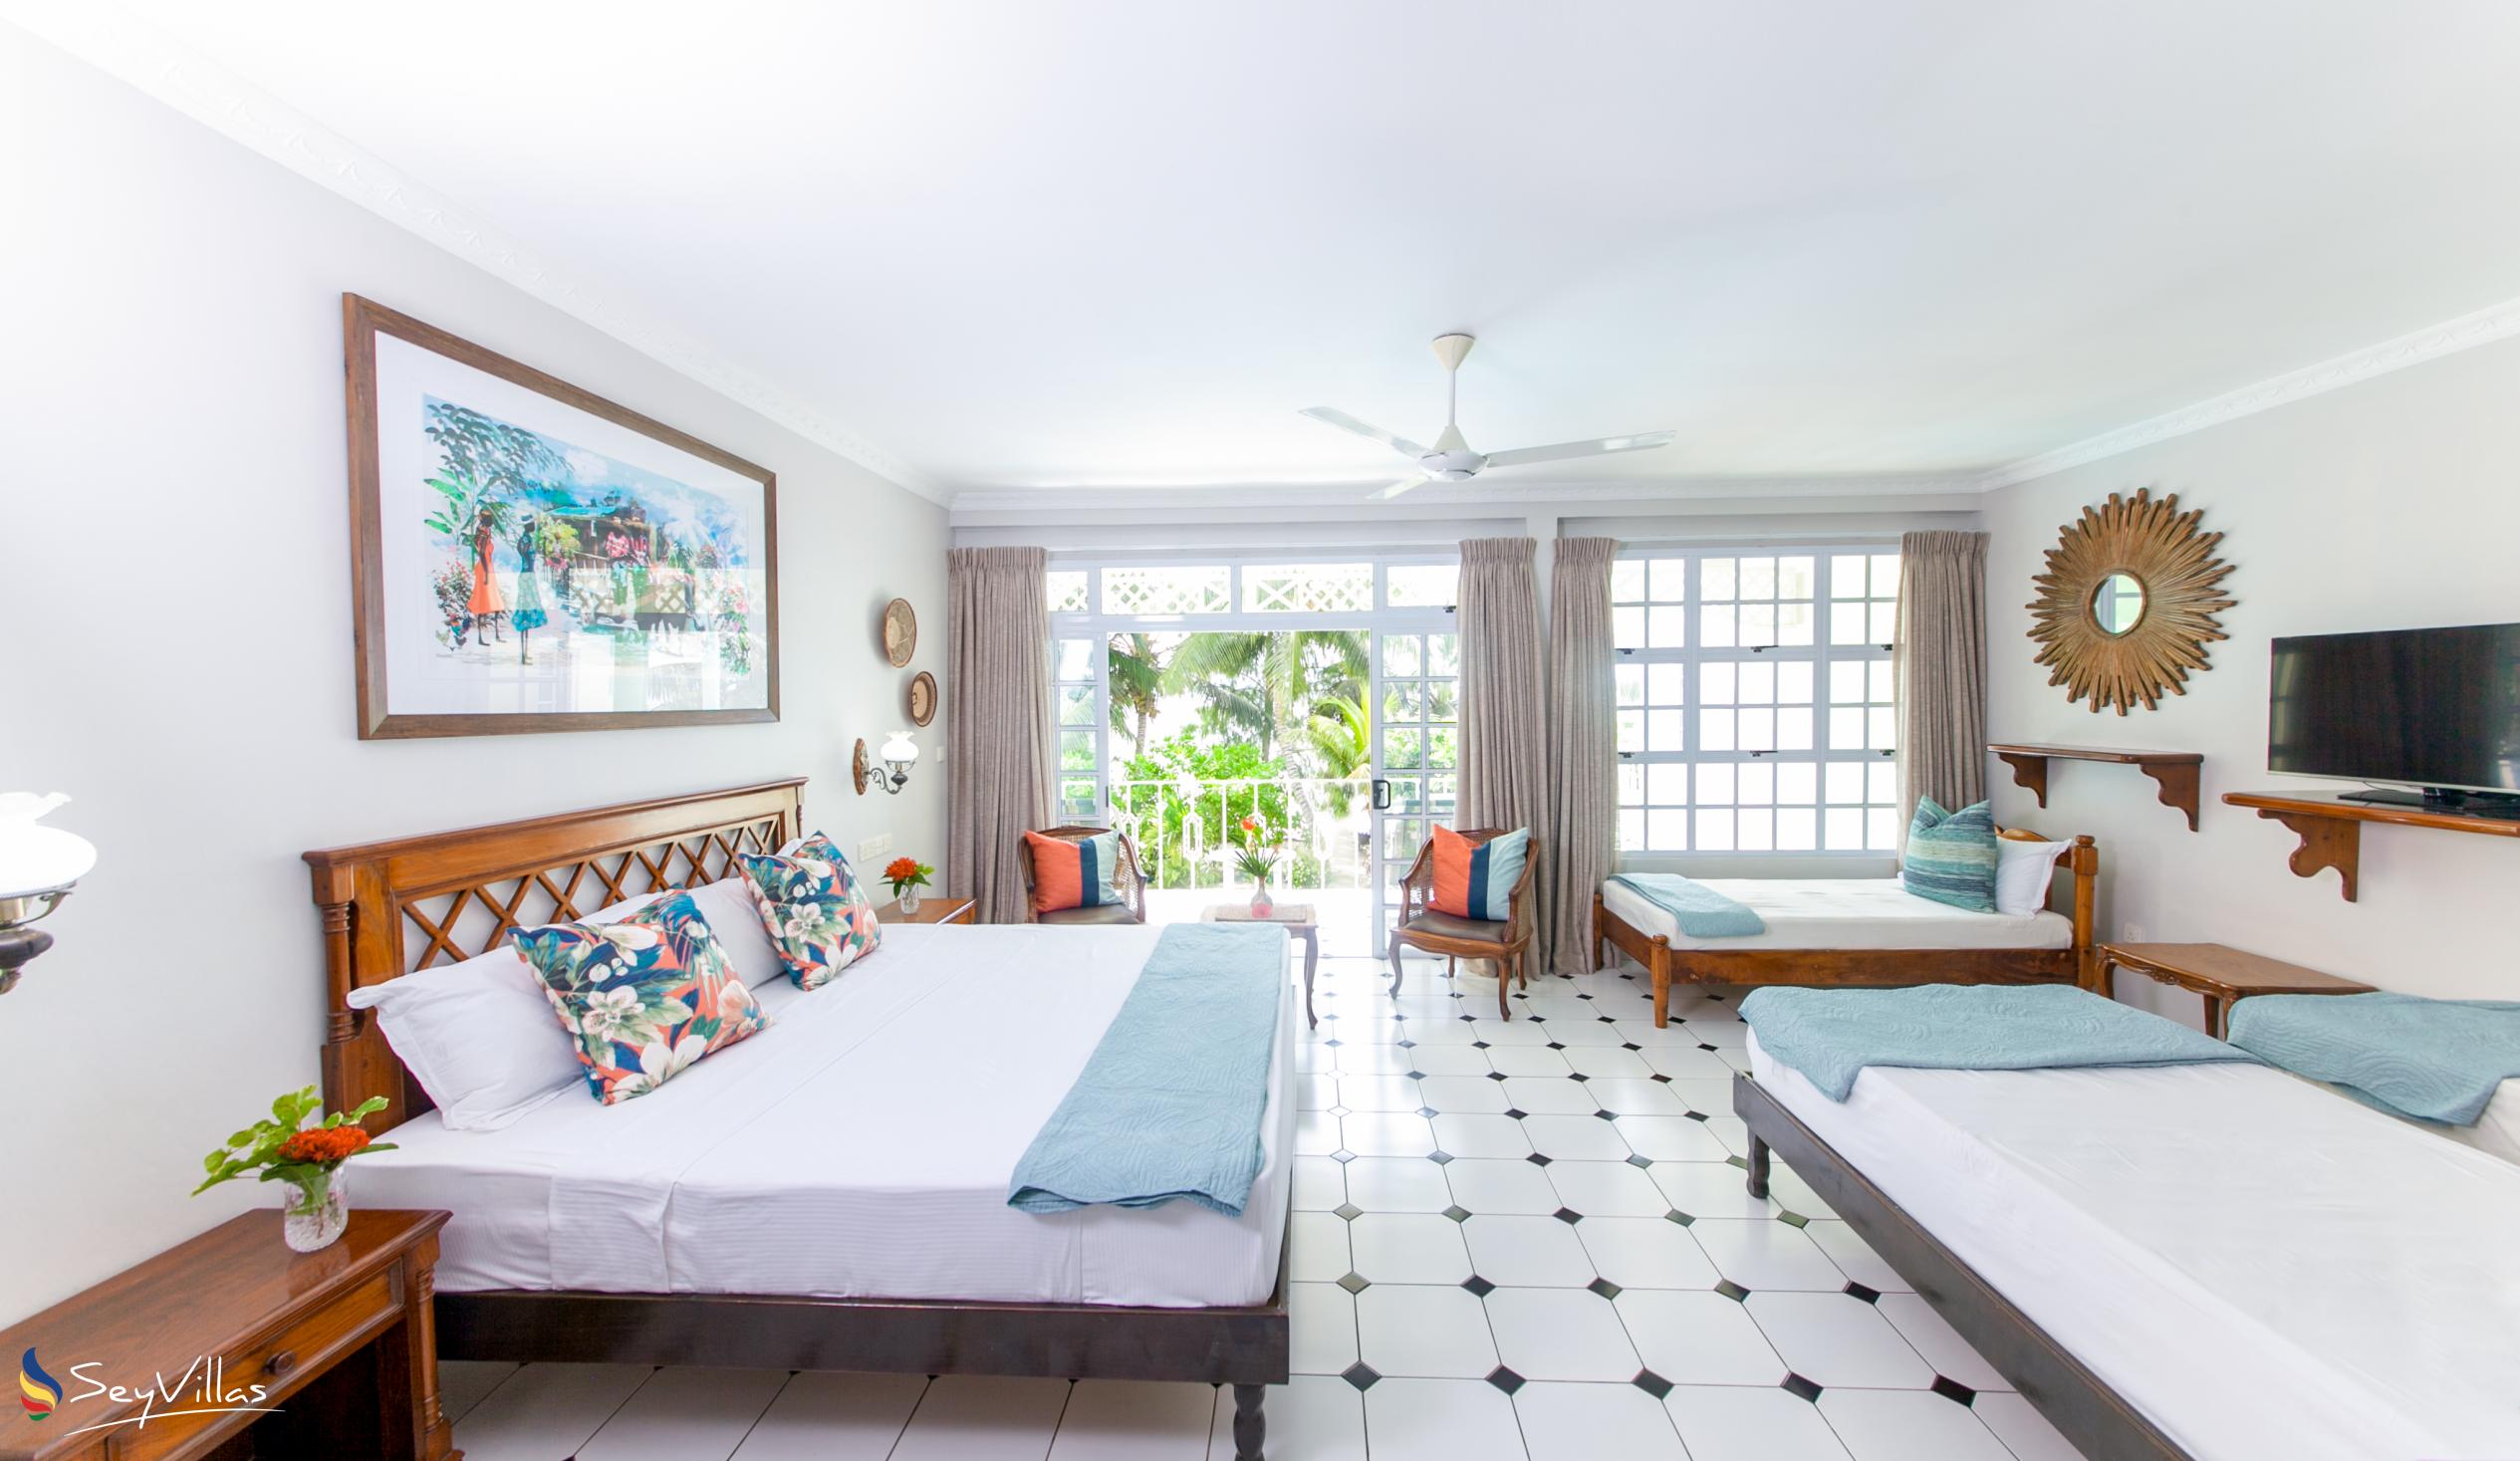 Foto 31: Palm Beach Hotel - Chambre Familiale - Praslin (Seychelles)